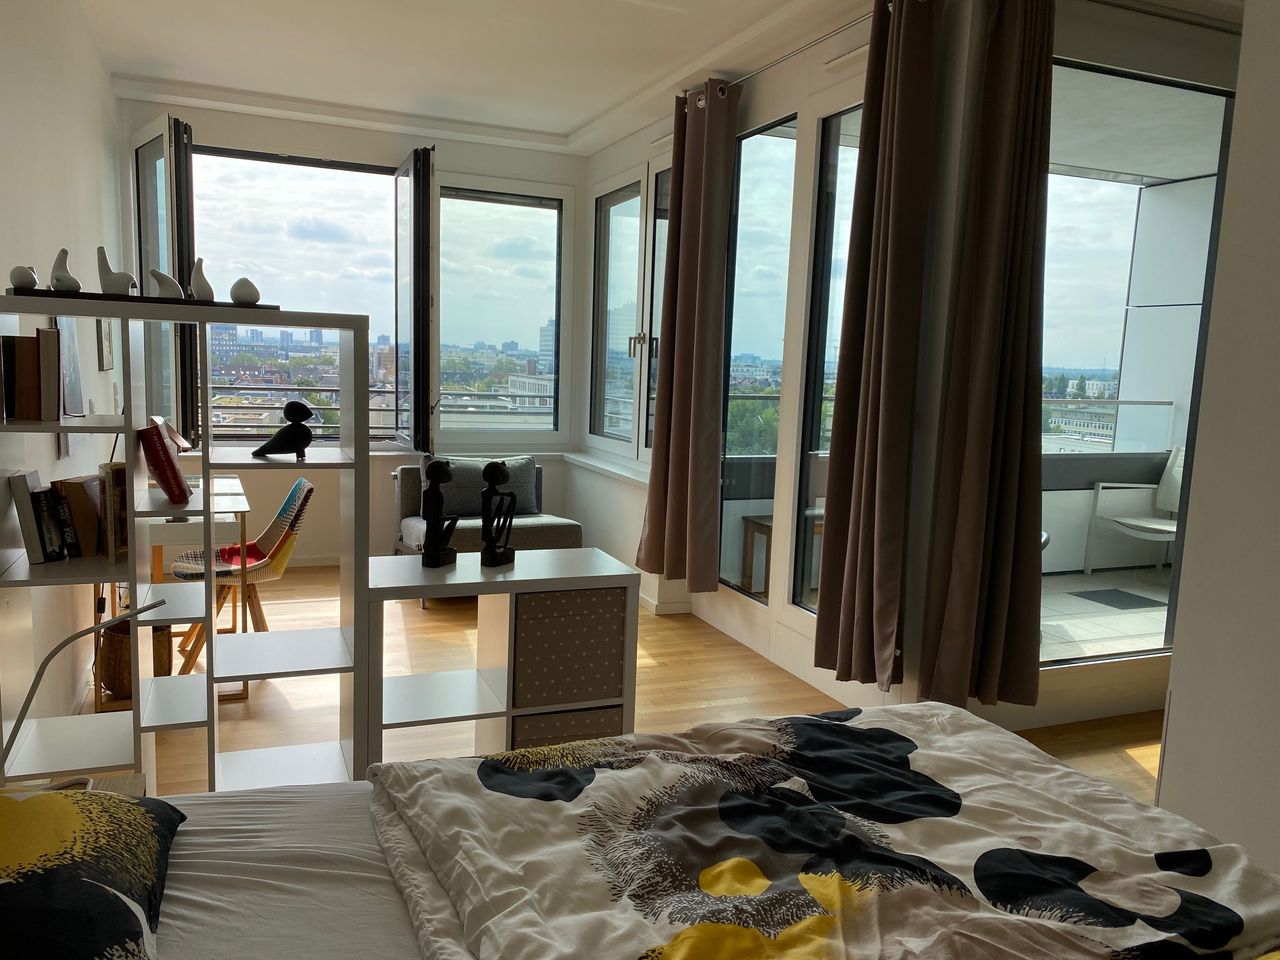 Attractive apartment with loft character near Europagarten